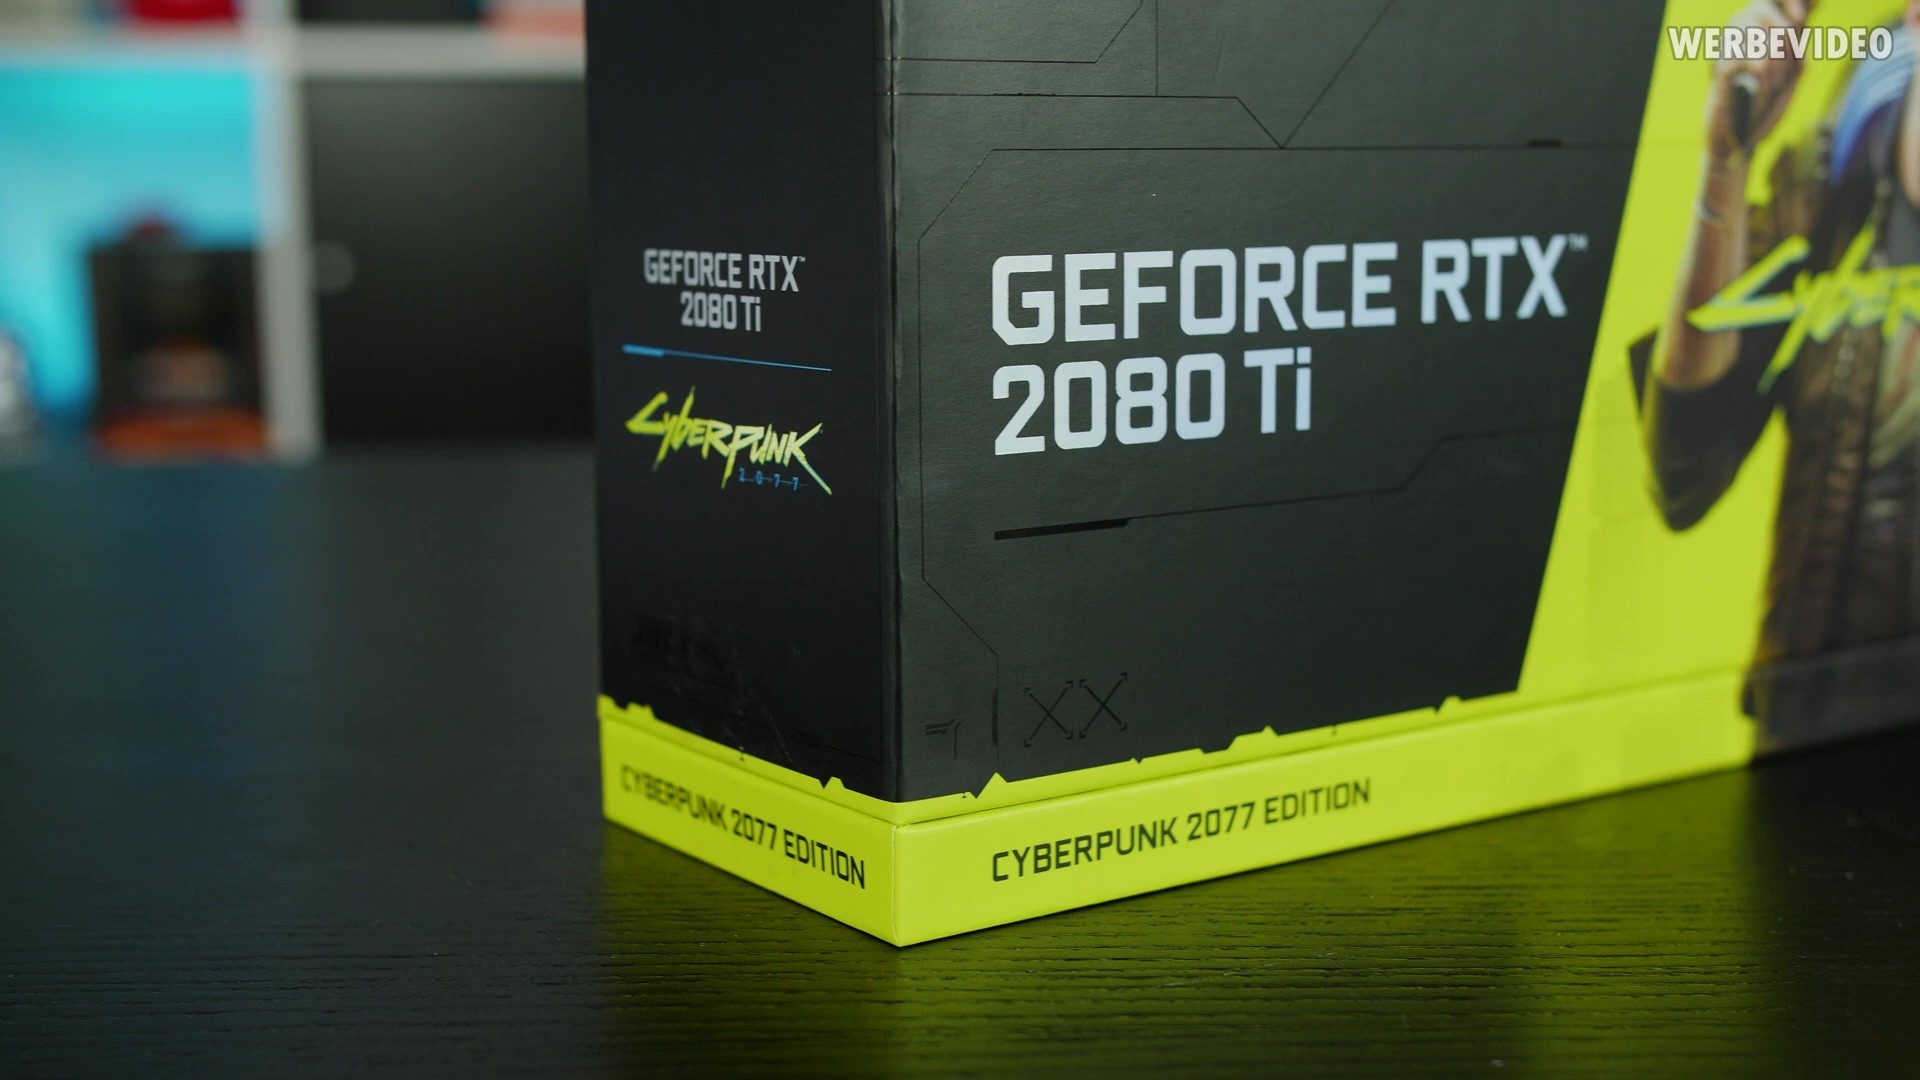 Nvidia RTX 2080 Ti - Cyberpunk 2077 Edition